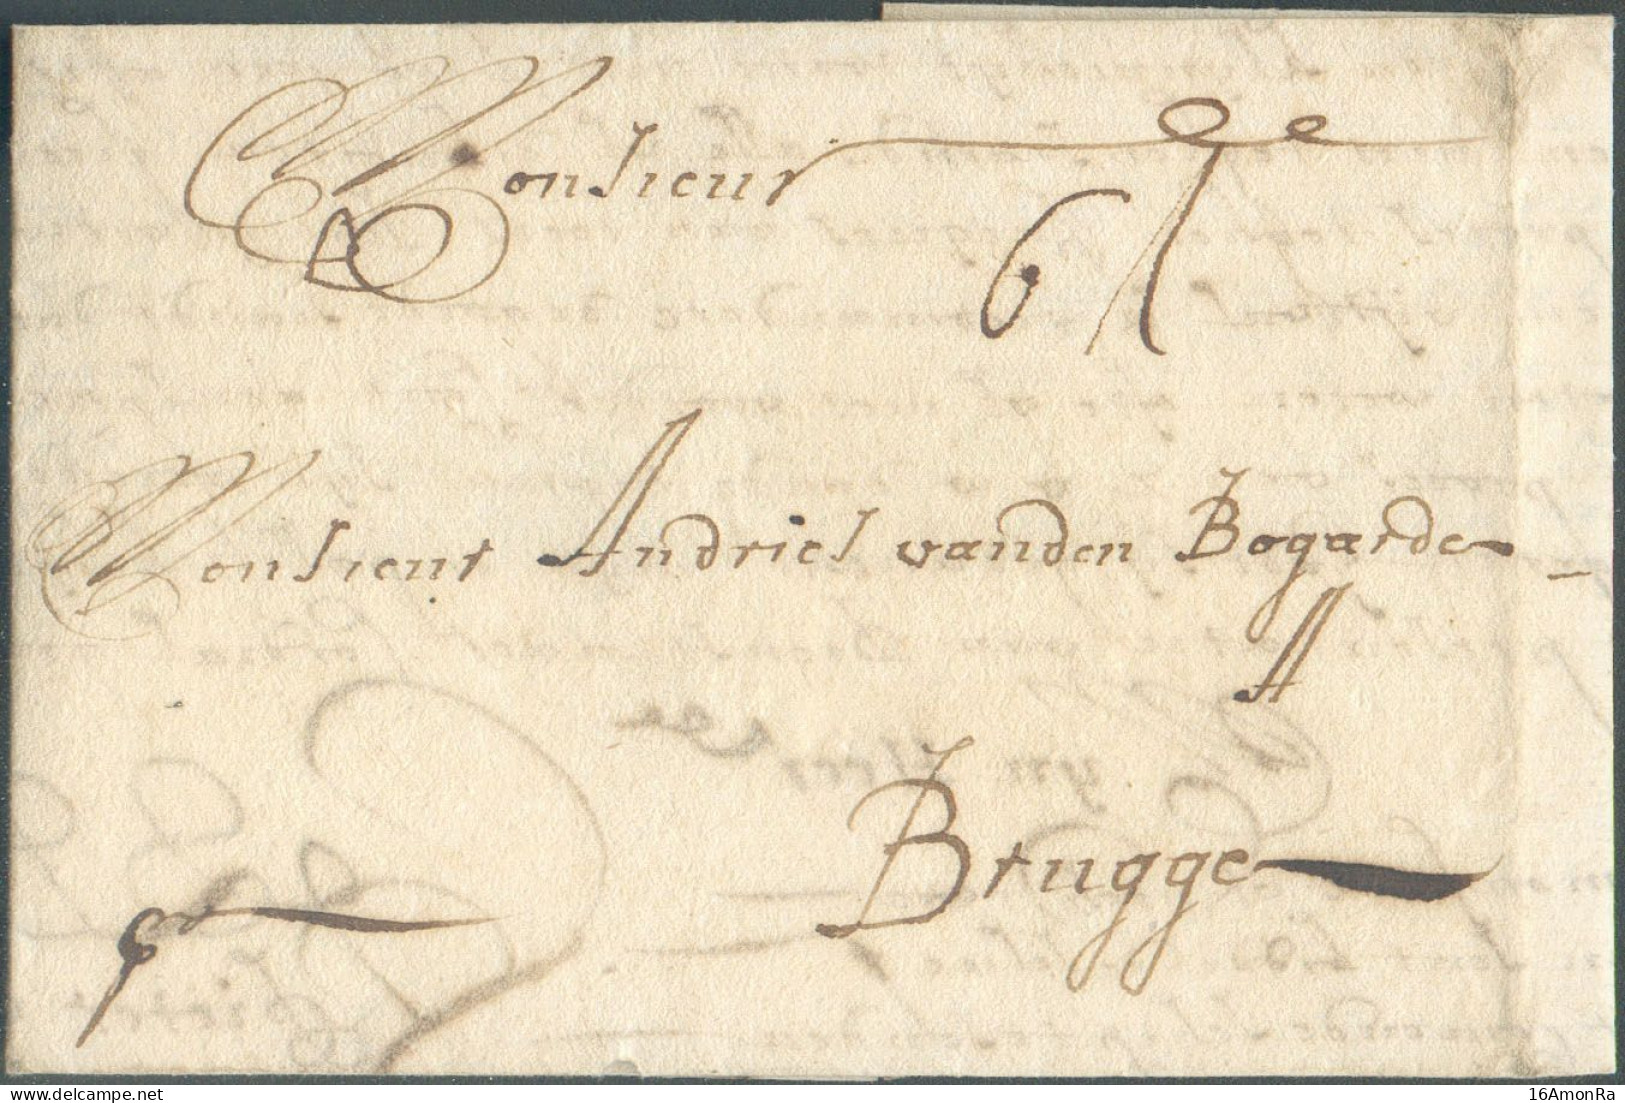 LAC De LONDON Le 23 Octobre 1699 Vers BRUGGE; Port '6' Shillings.  Superbe - 21367 - 1621-1713 (Paesi Bassi Spagnoli)